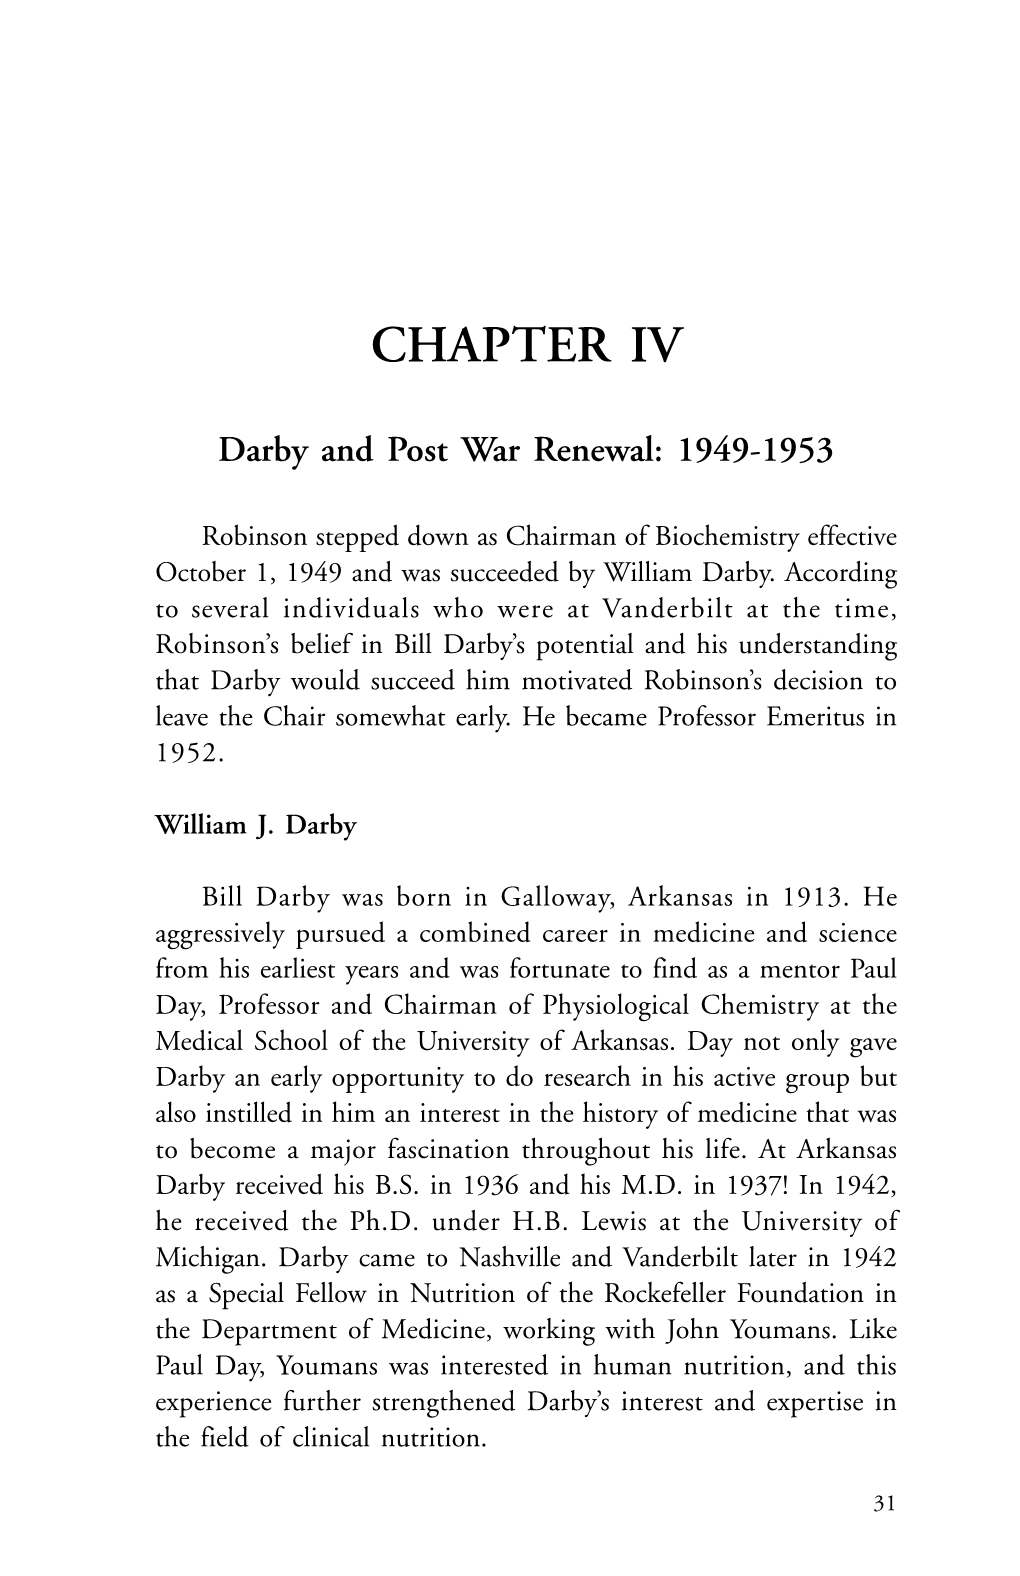 Darby and Post War Renewal: 1949-1953